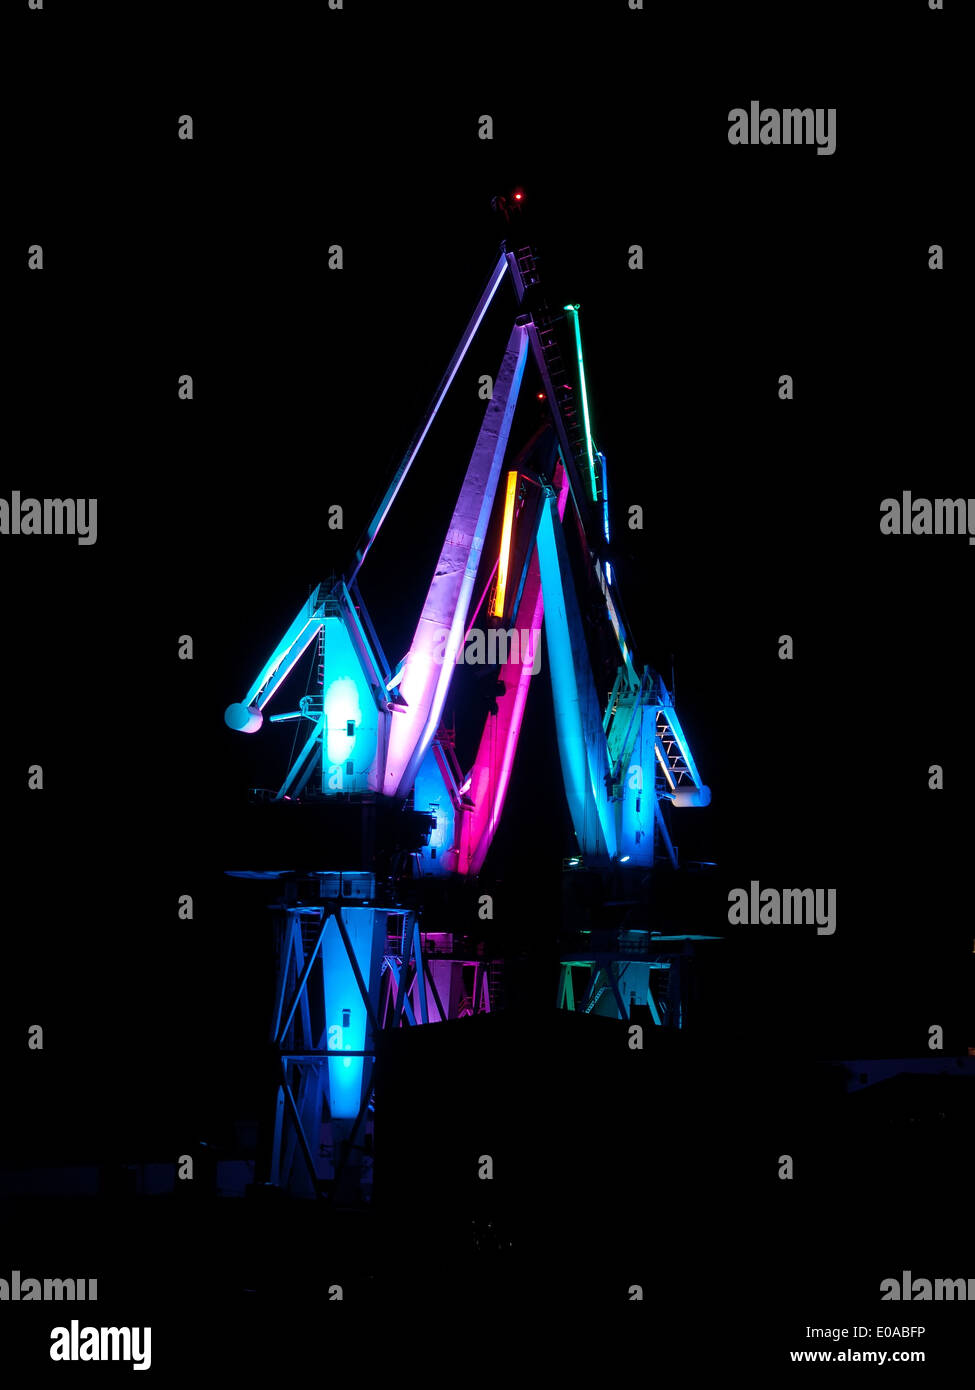 Shipyard cranes by night, multicolored illumination Stock Photo